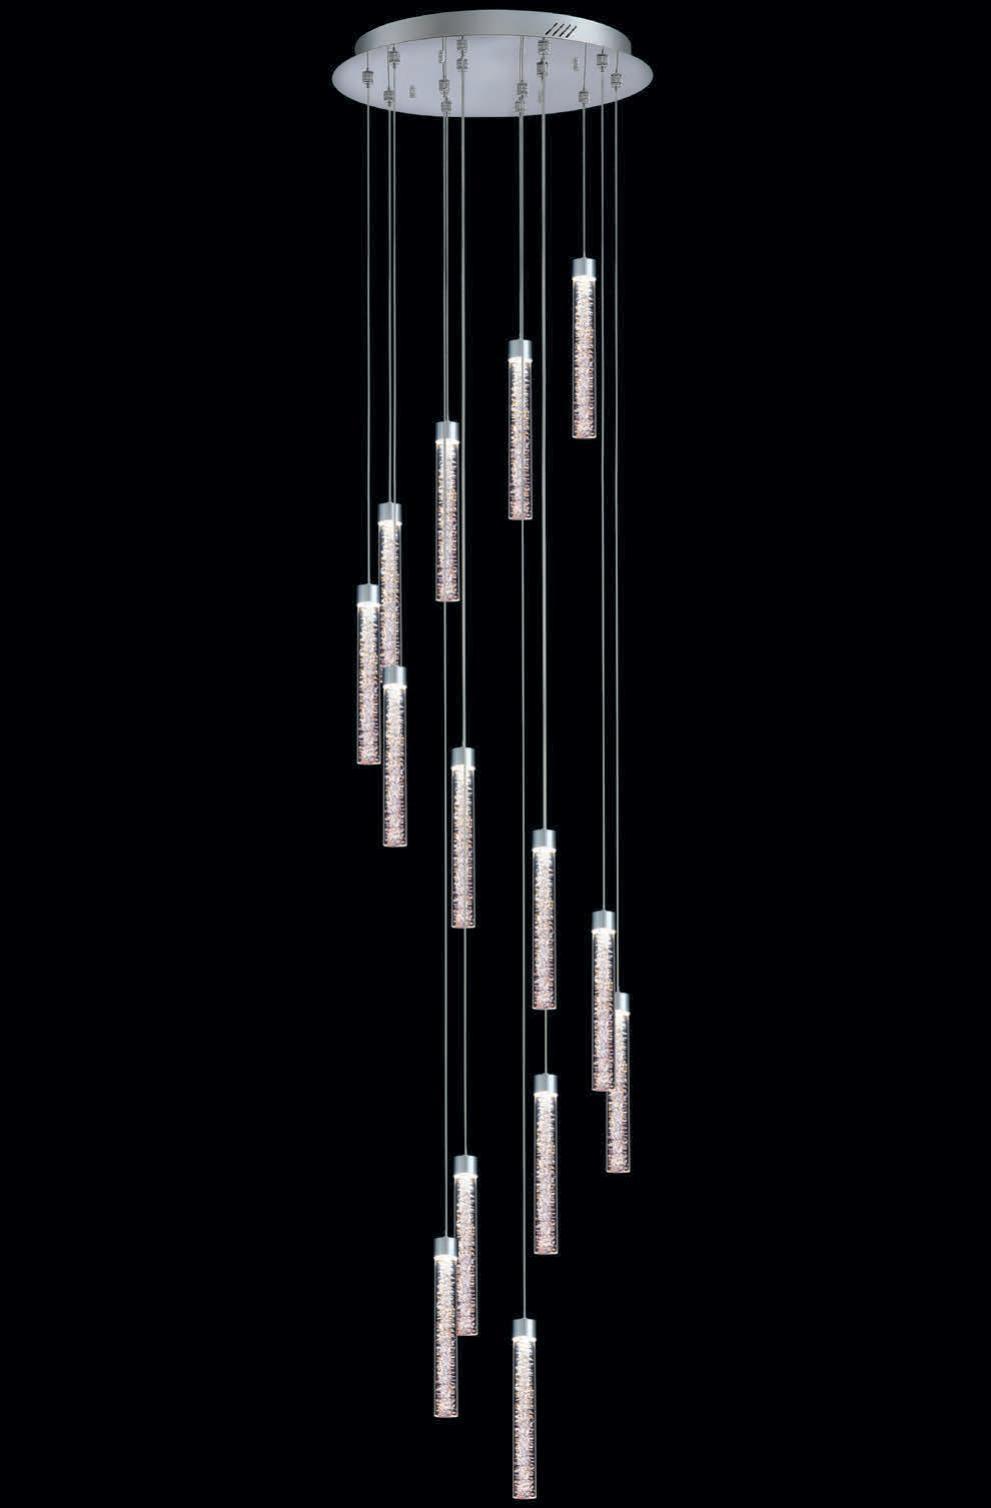 Luxury Modern Home Decorative Pendant Light Hanging LED Pendant Lamp Crystal Pendant Lighting